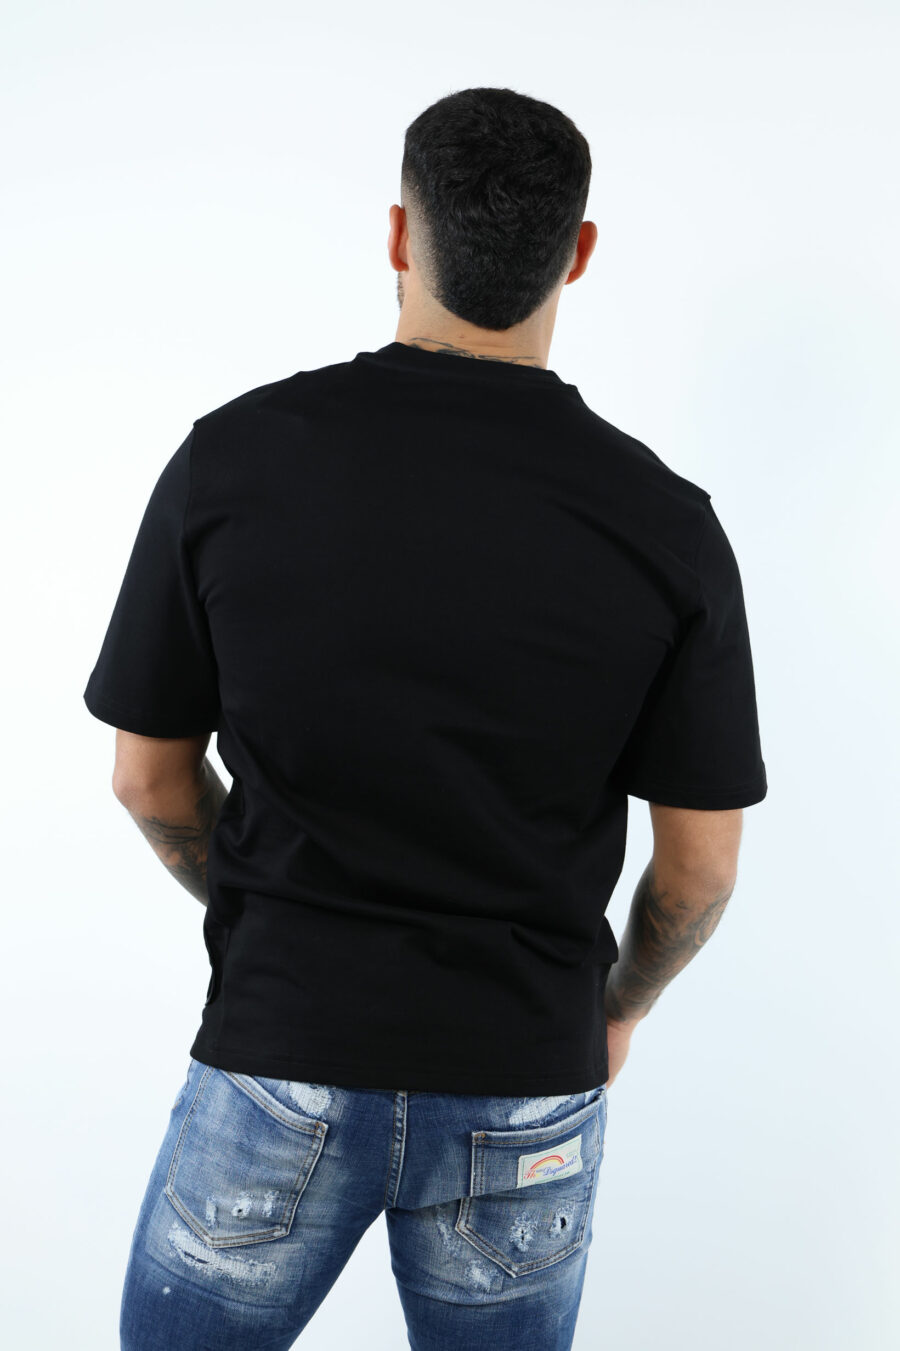 Camiseta negra mix con bolsillo y logo etiqueta monocromático - 107026